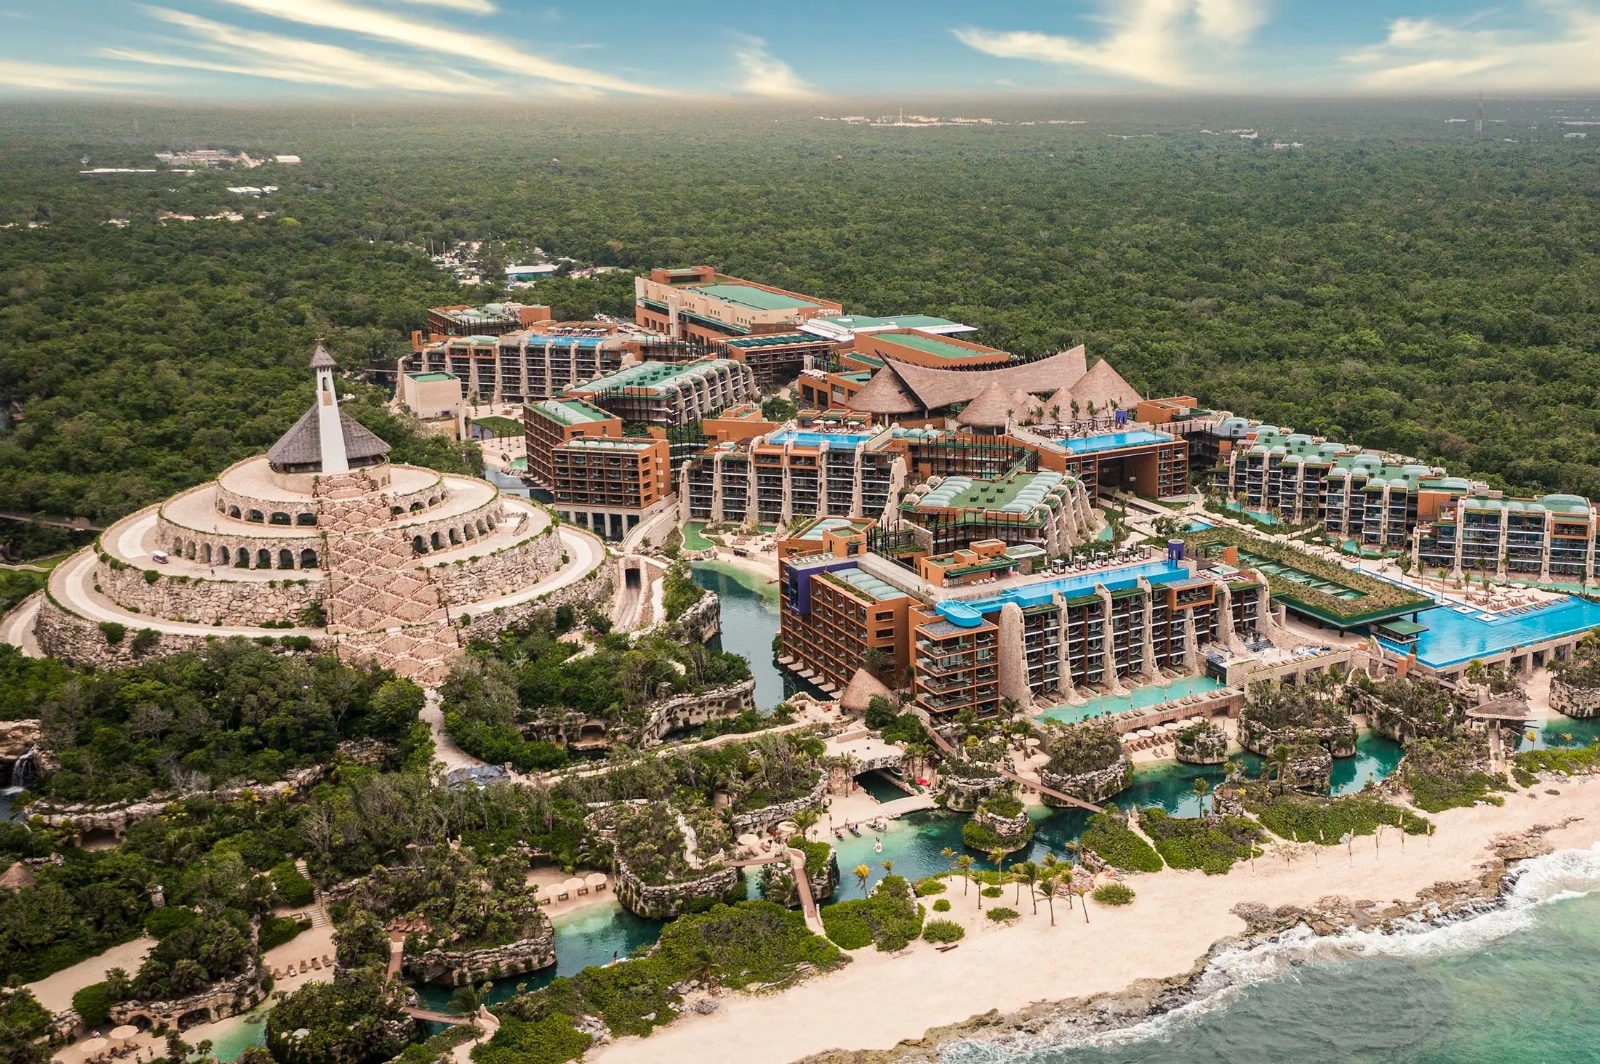 La FGE Quintana Roo abrió la carpeta de investigación sobre el tiroteo que se registró en el hotel Xcaret en la Riviera Maya